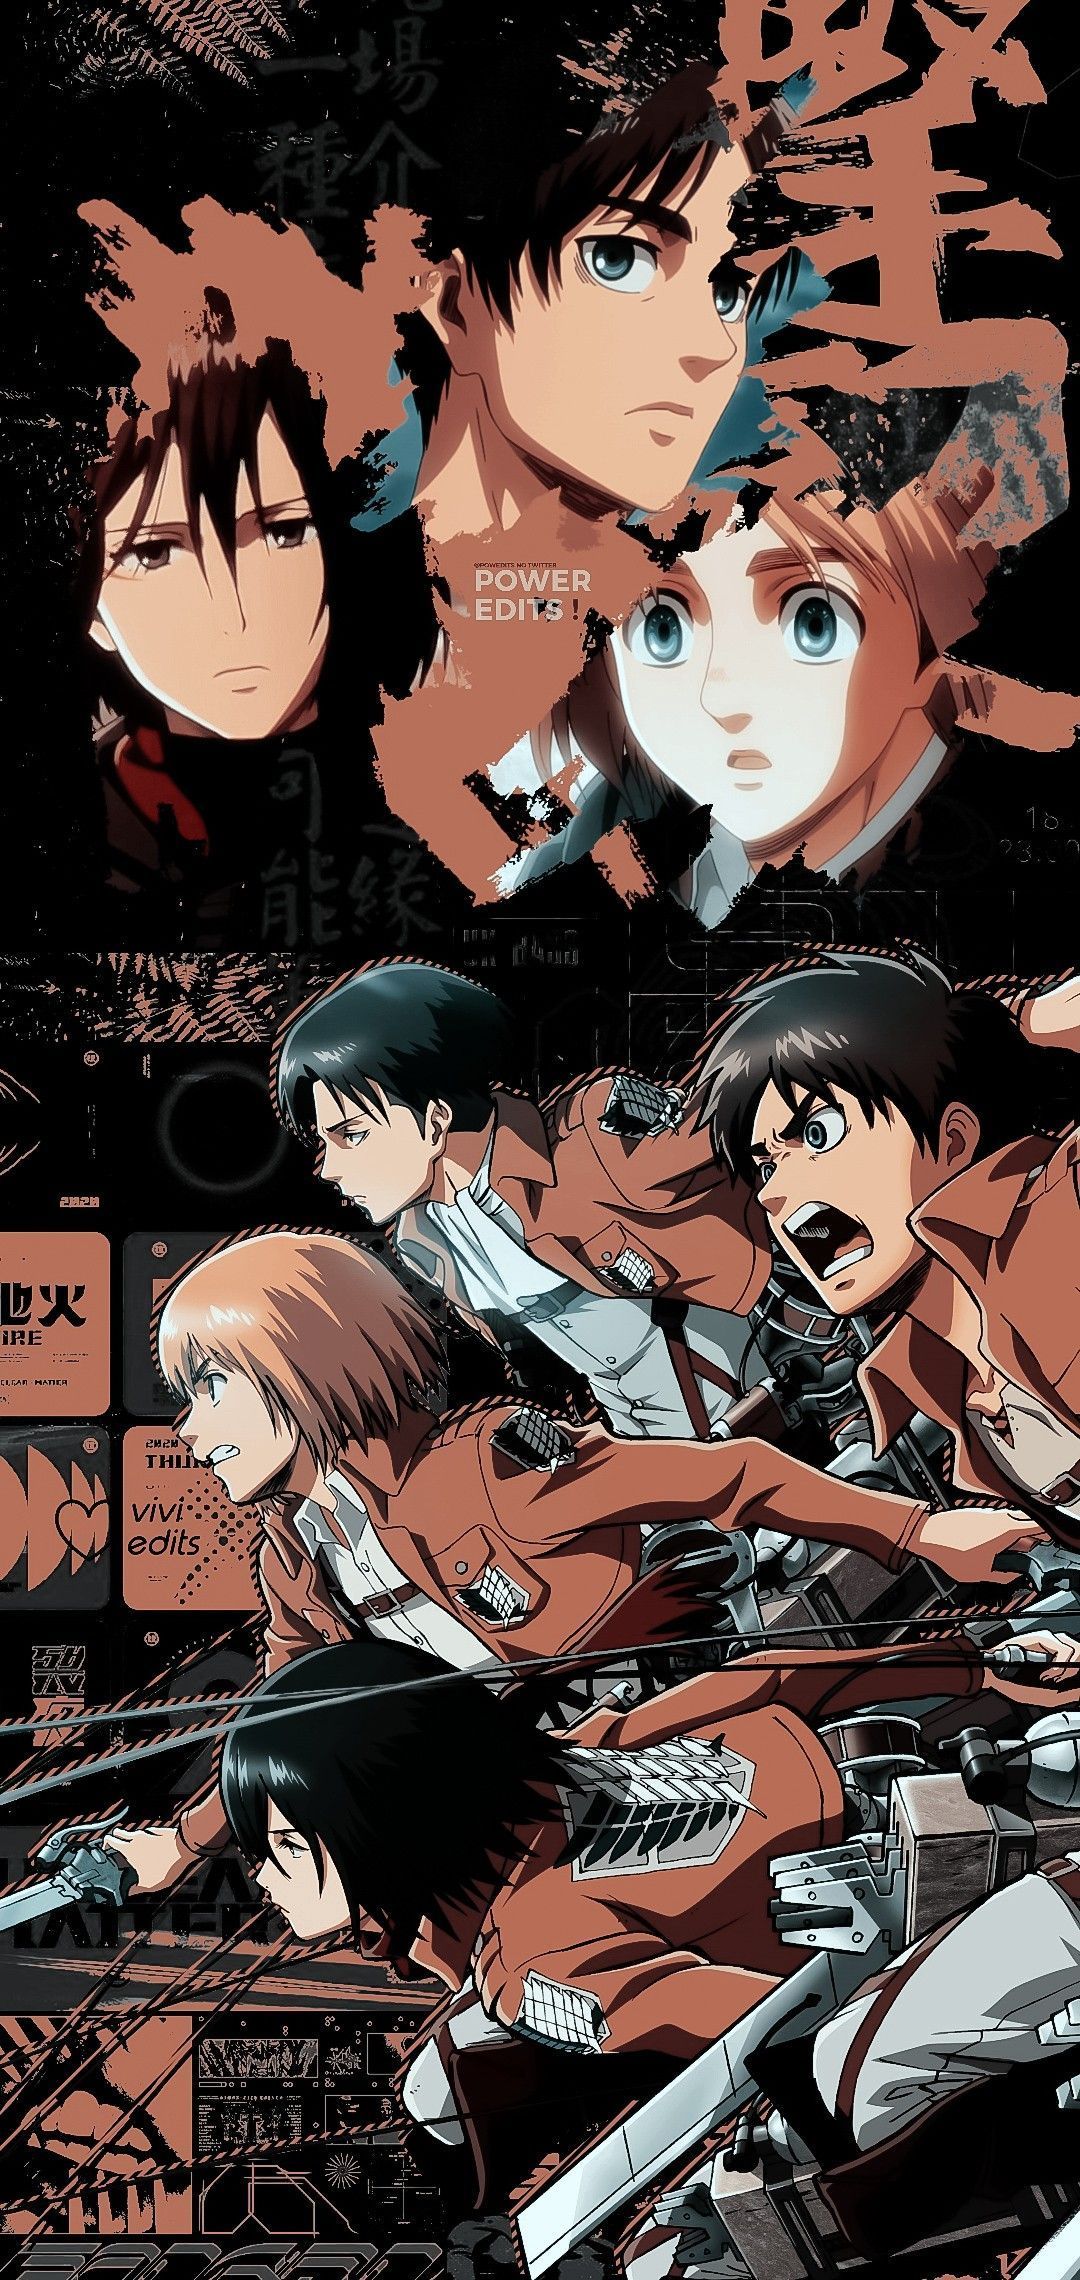 Power Edits on Twitter. Anime wallpaper, Cool anime wallpaper, Aot wallpaper